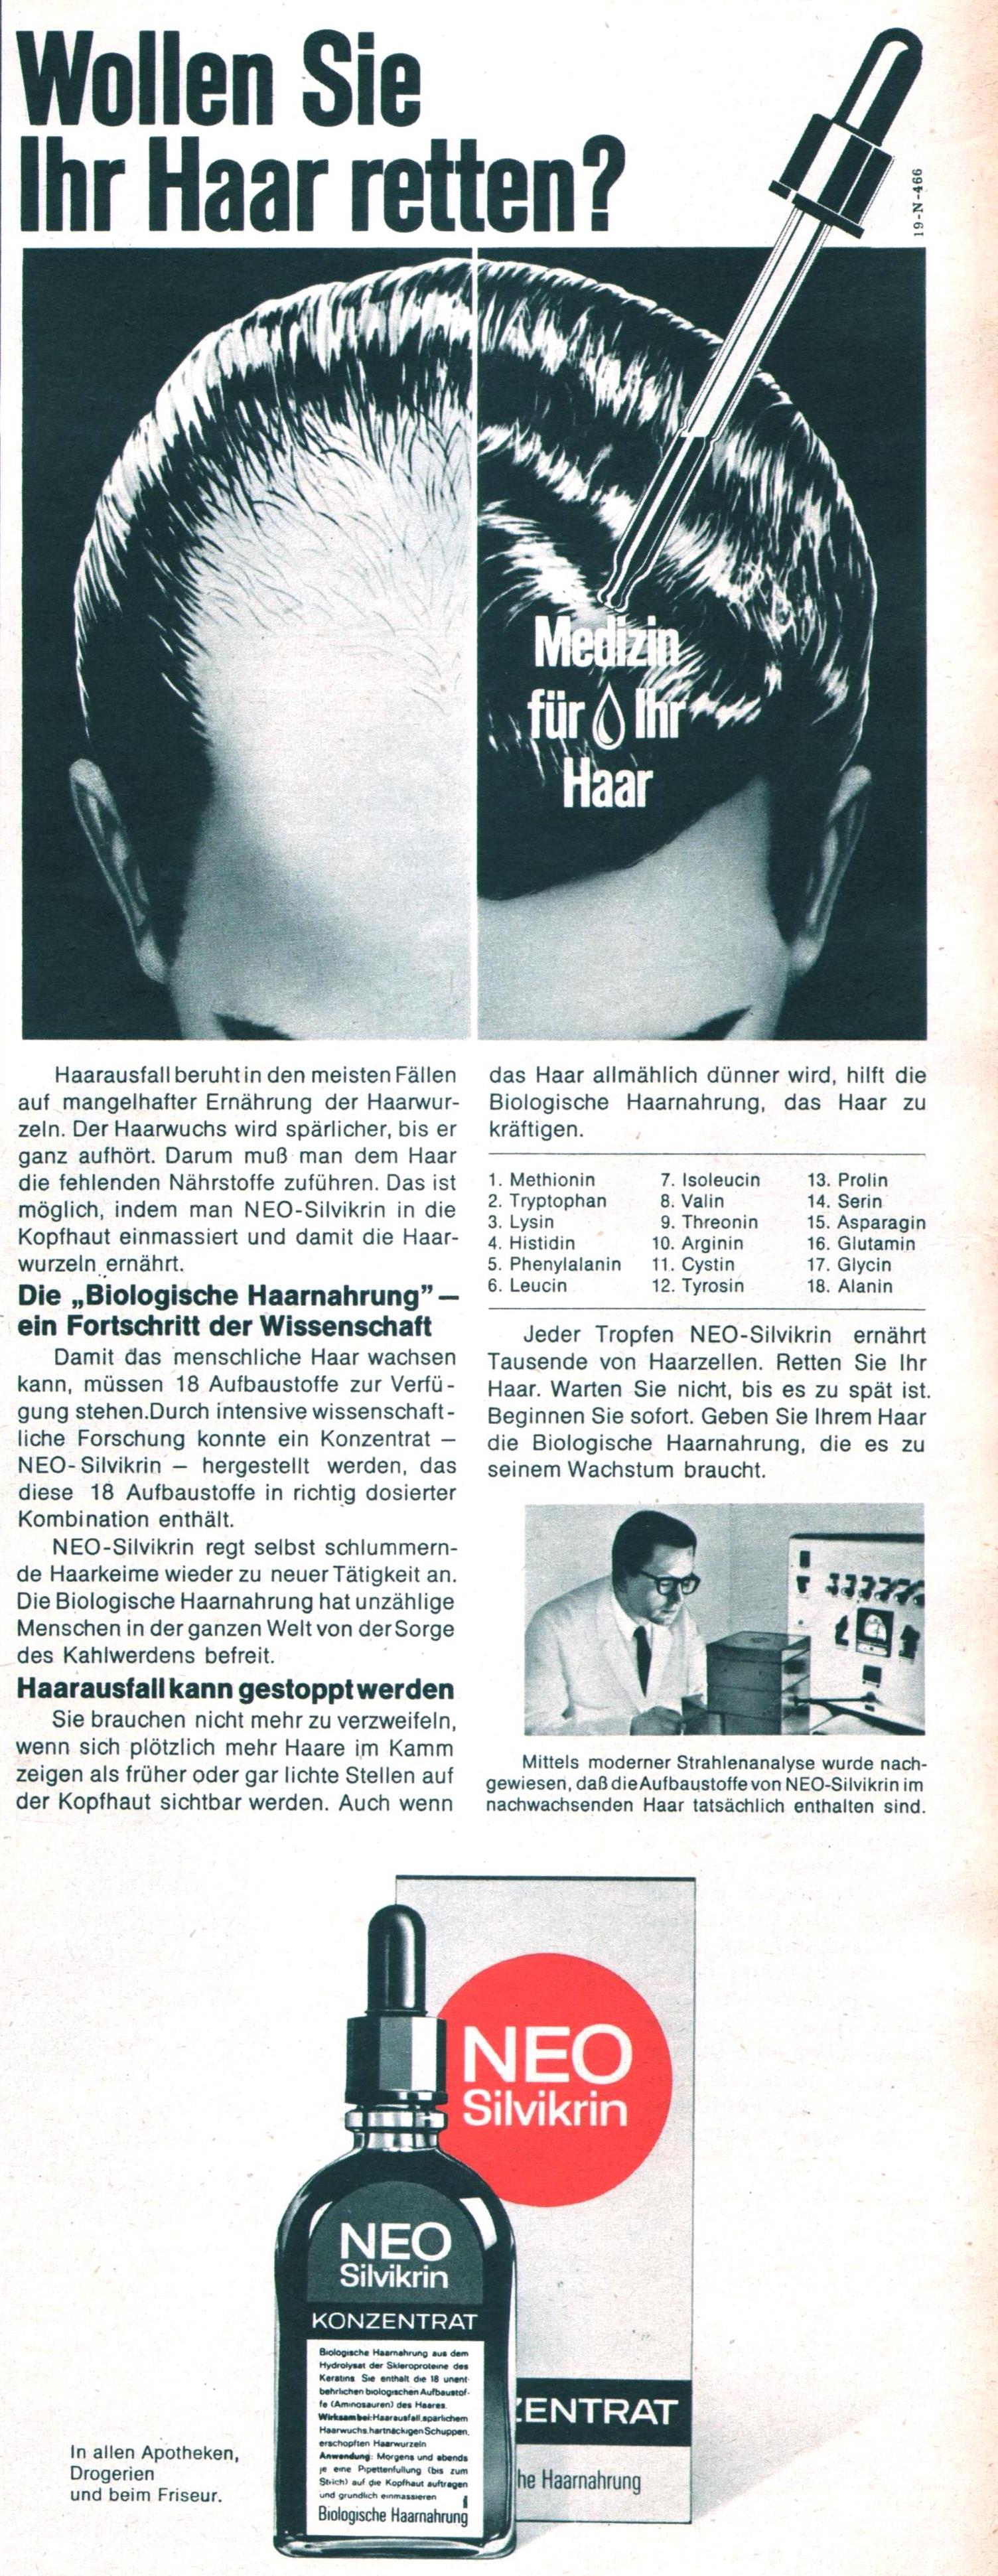 Neo Solvikrin 1967 0.jpg